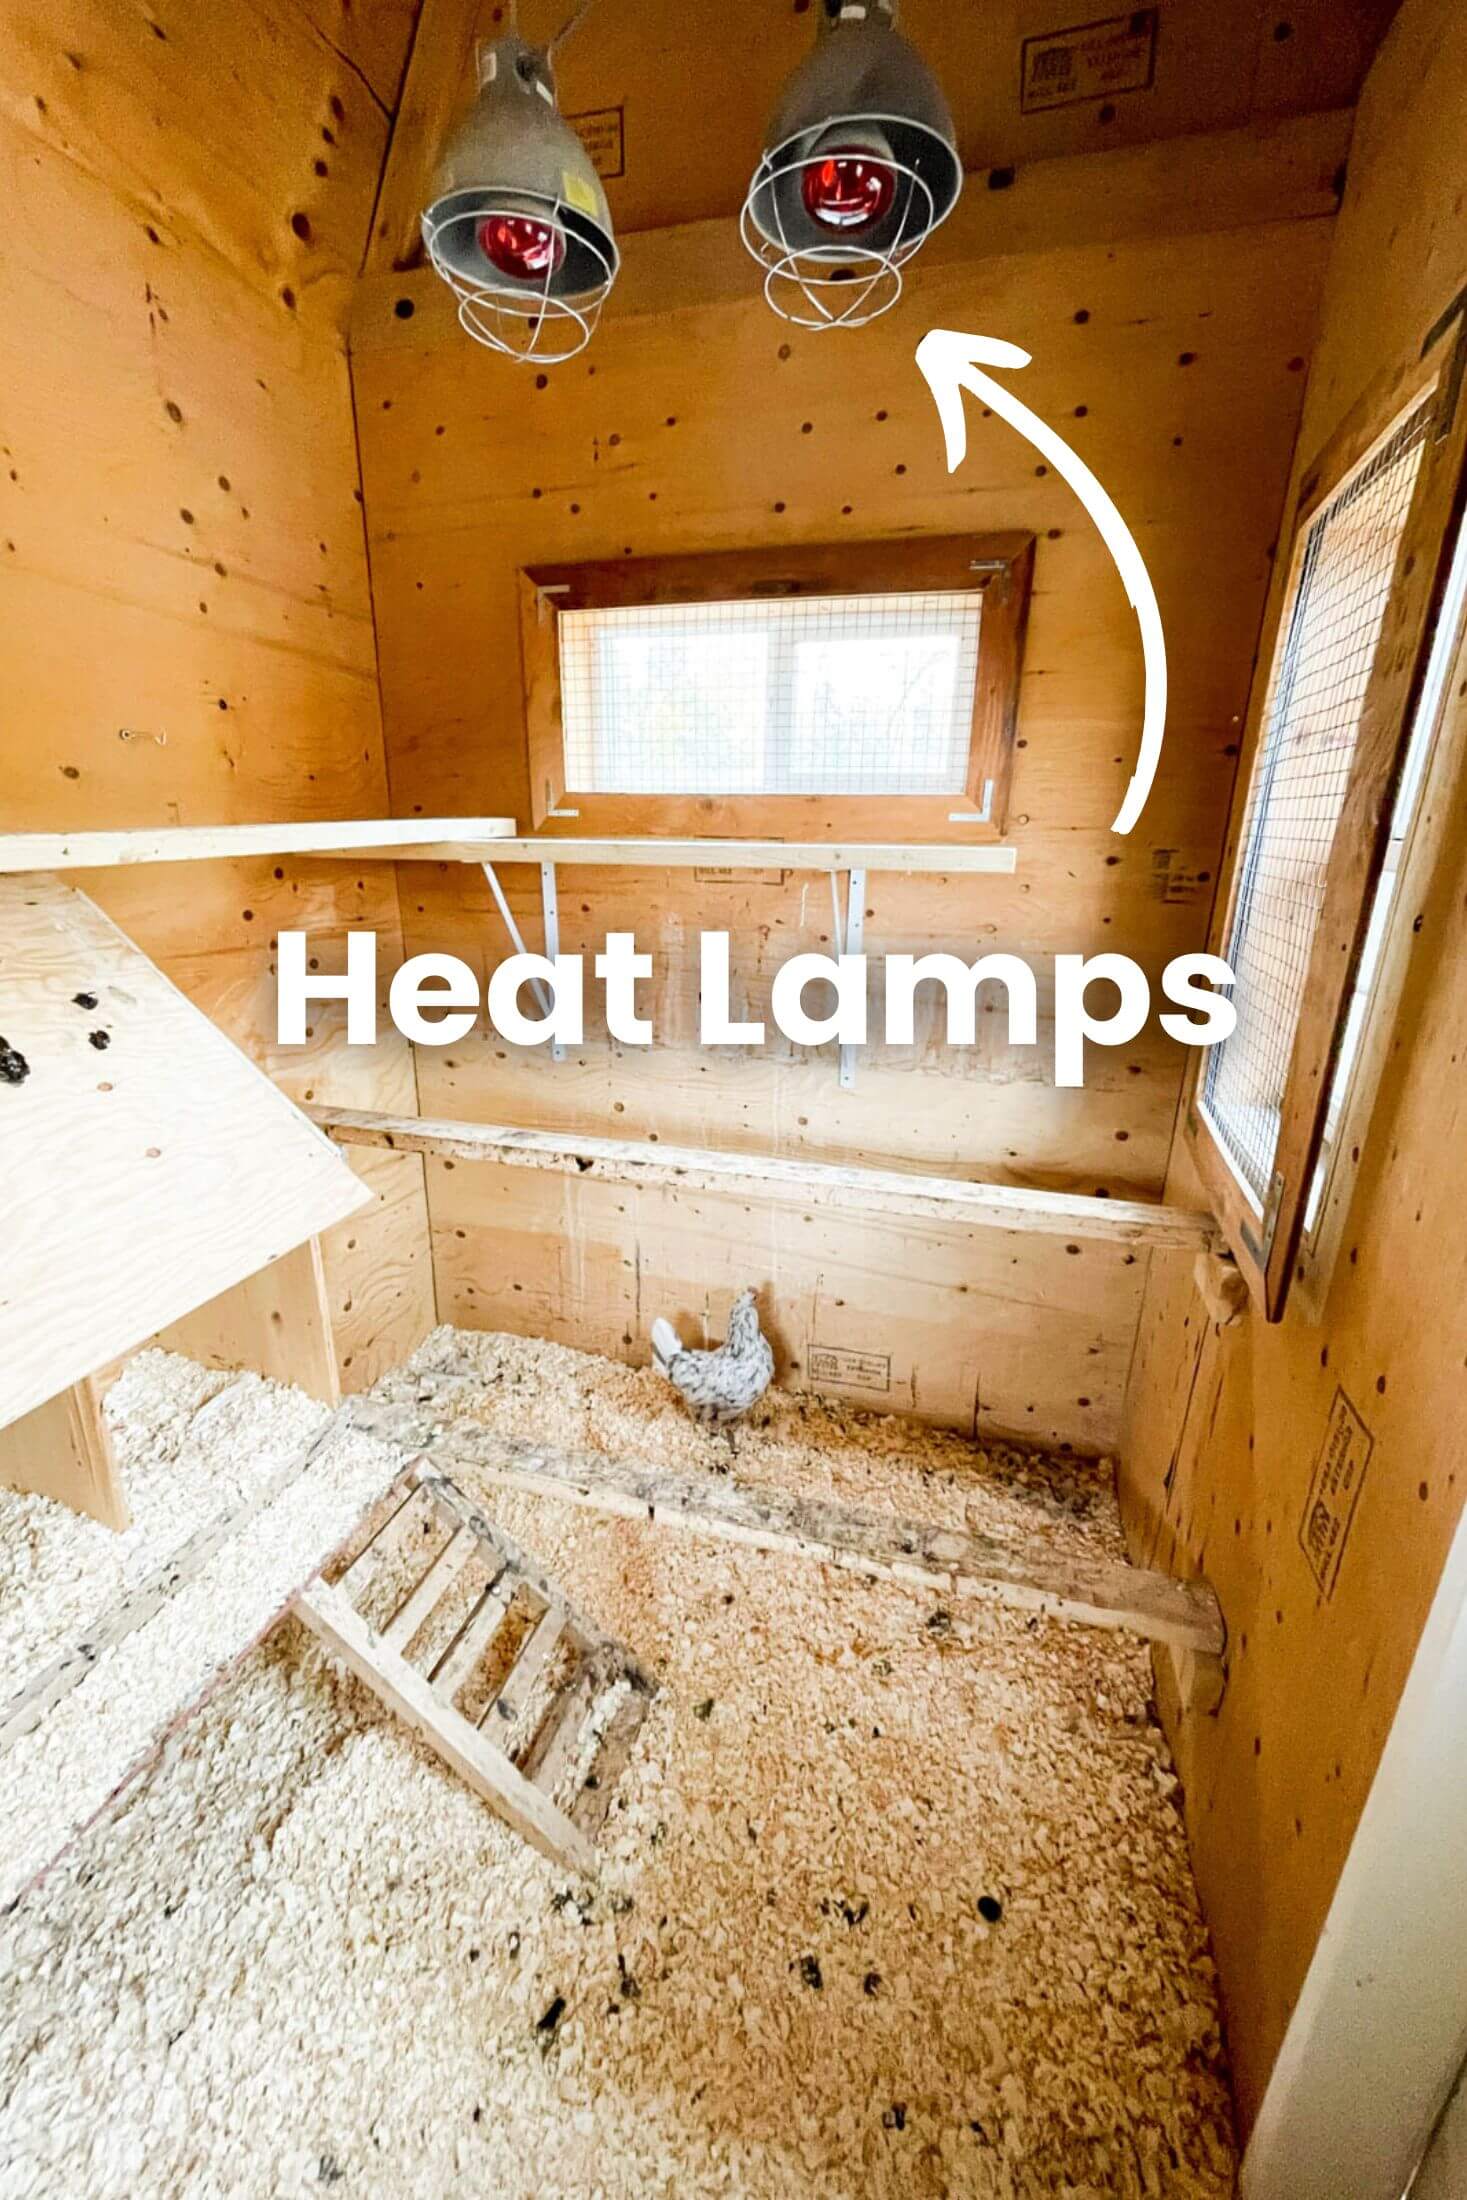 Heat lamps in a chicken coop.